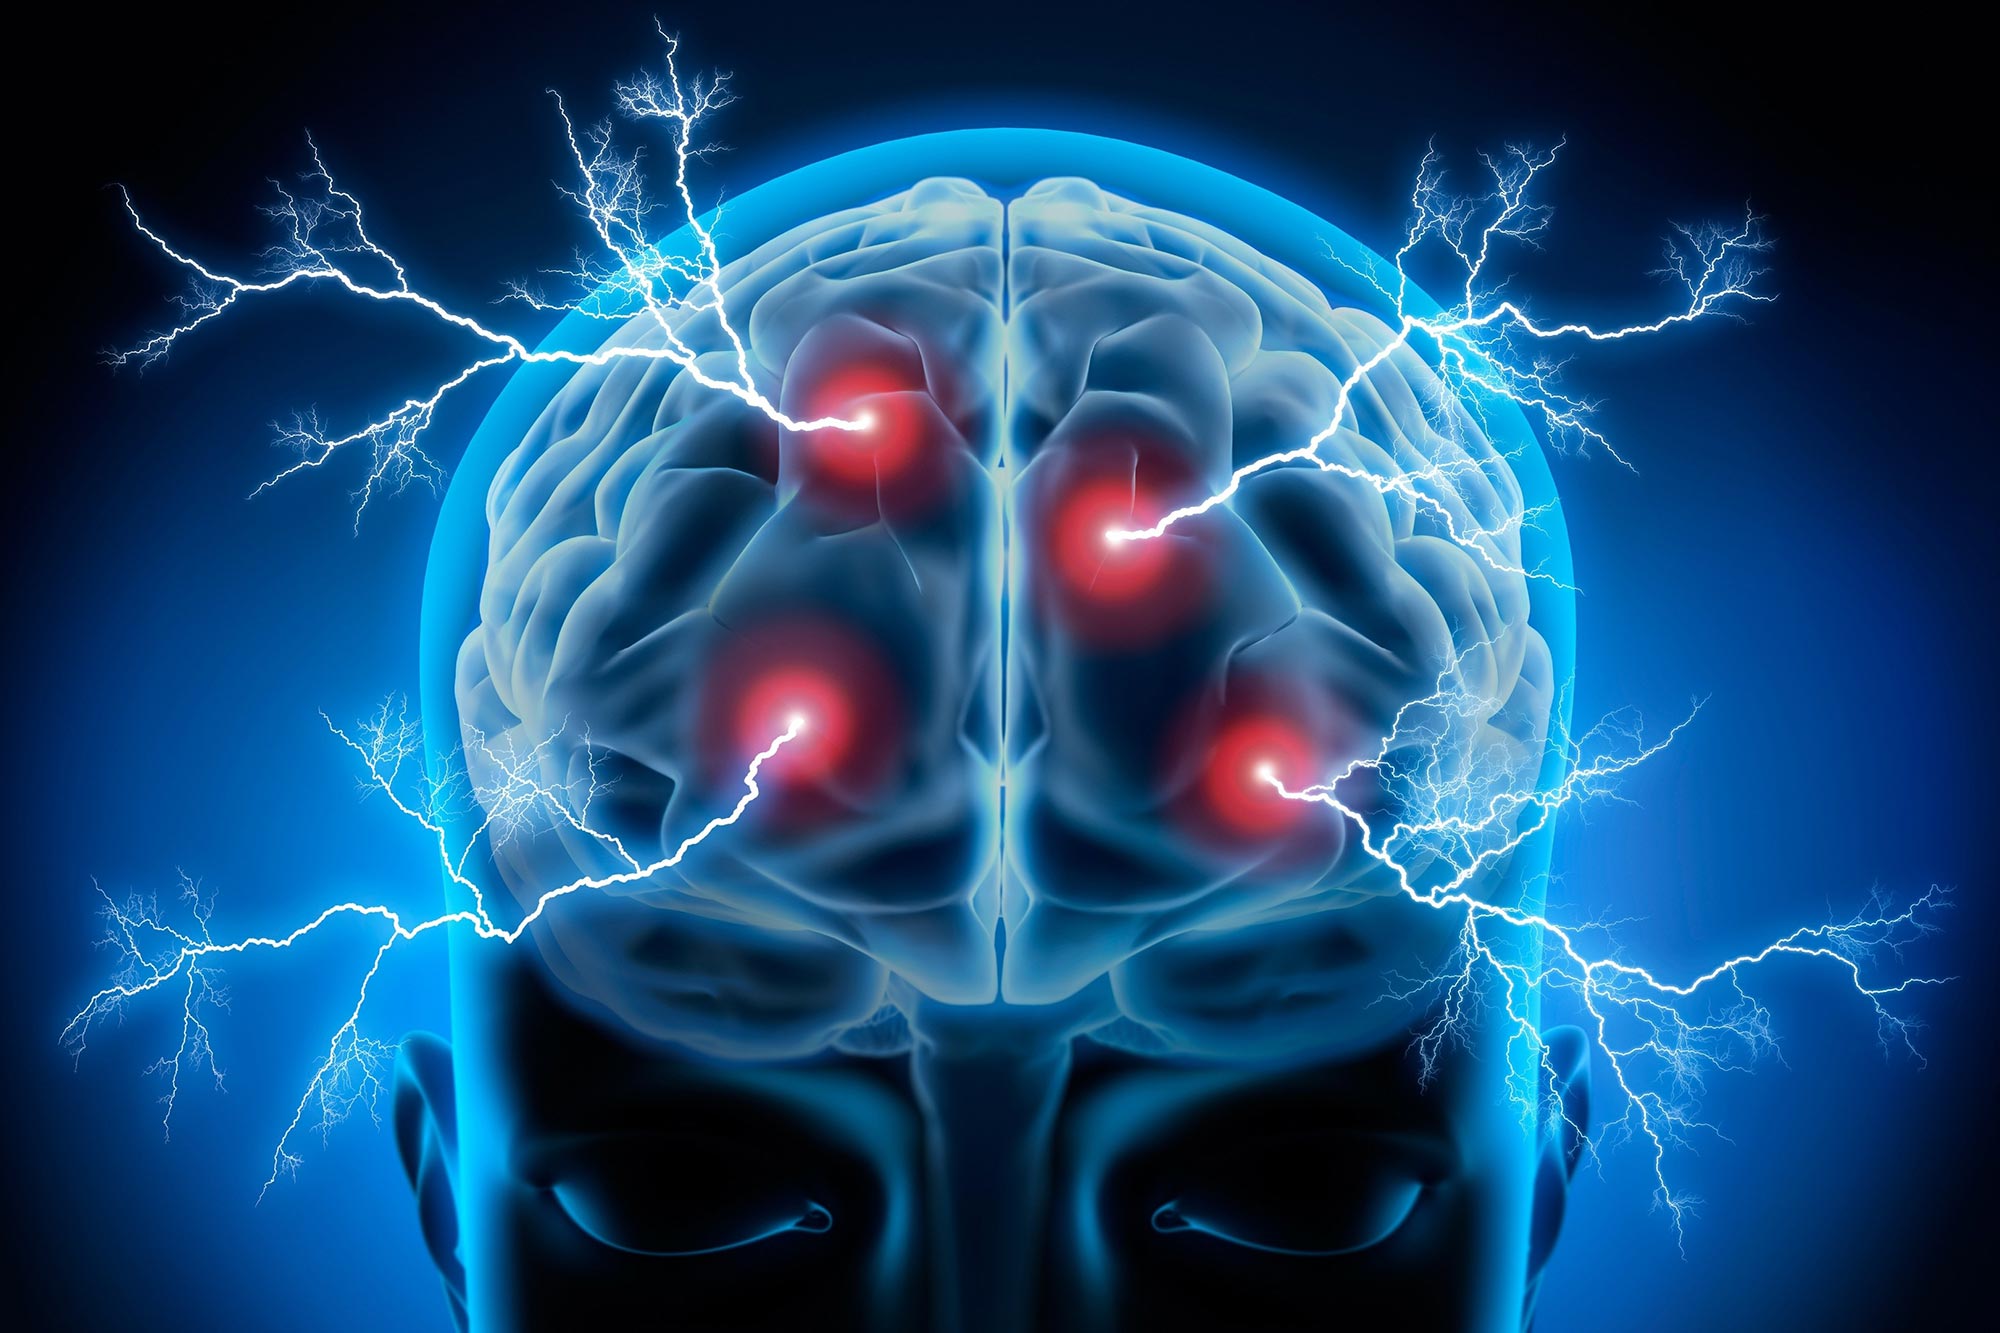 Brain electrical activity